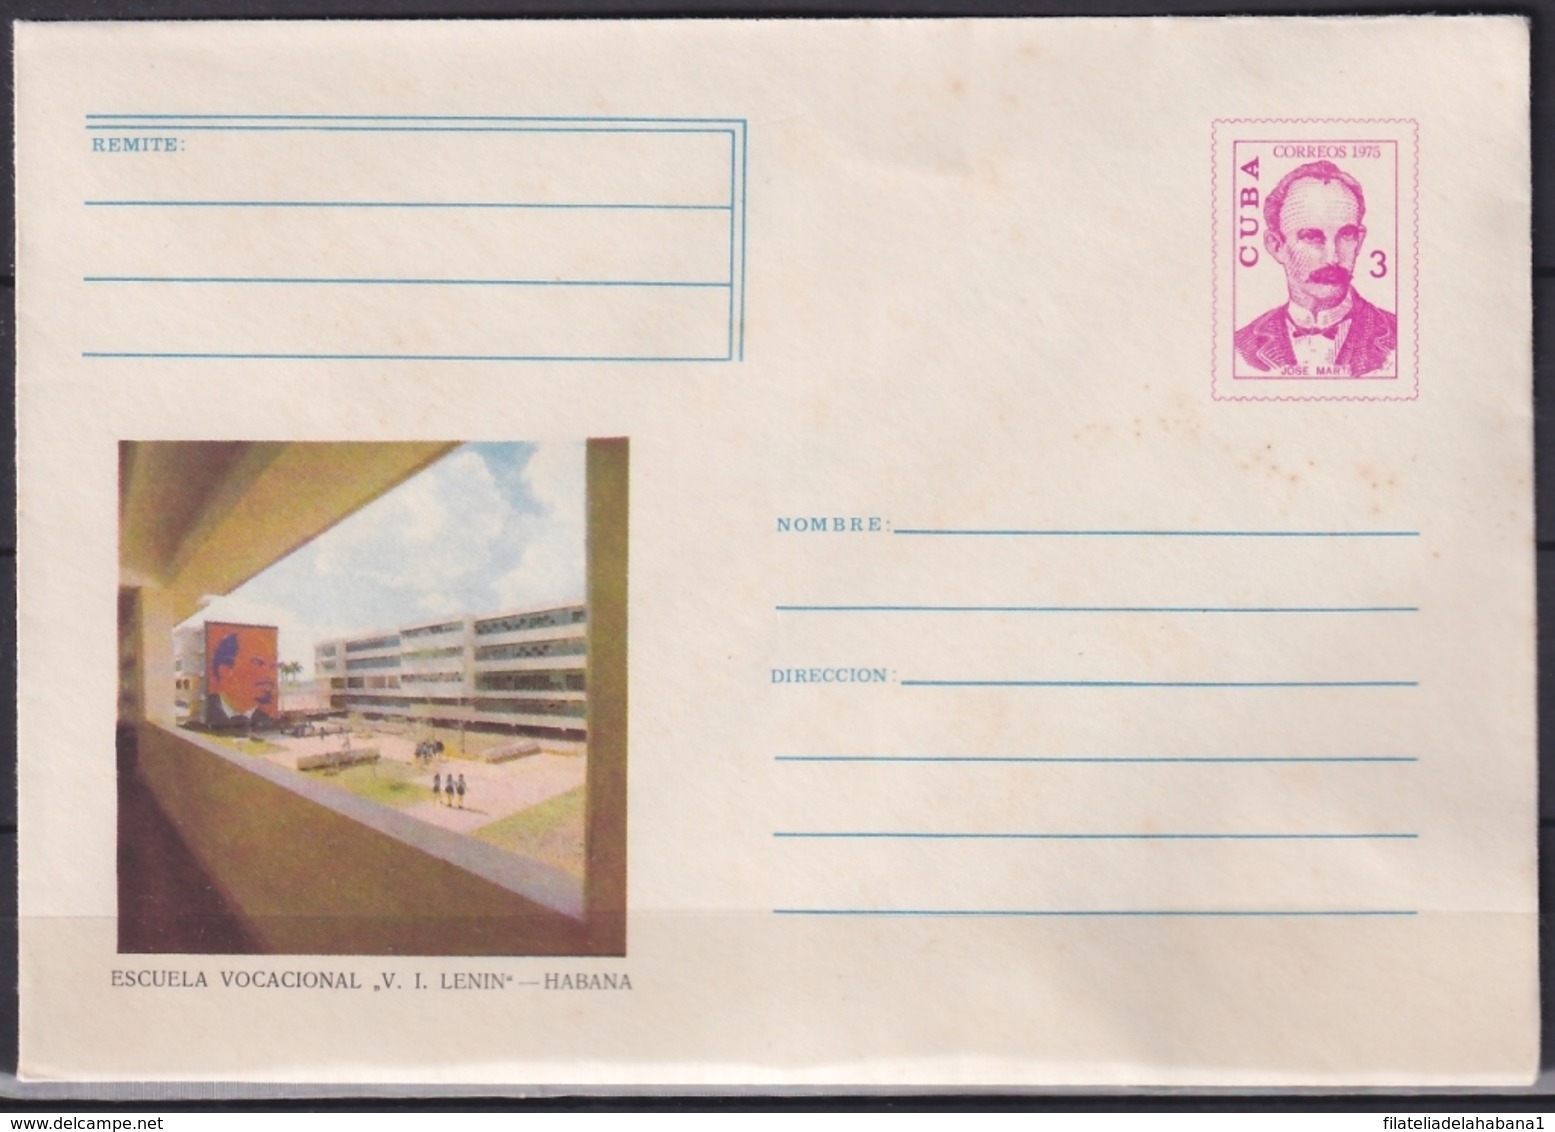 1975-EP-113 CUBA 1975 3c POSTAL STATIONERY COVER. HAVANA, ESCUELA VOCACIONAL LENIN. MANCHAS. - Lettres & Documents